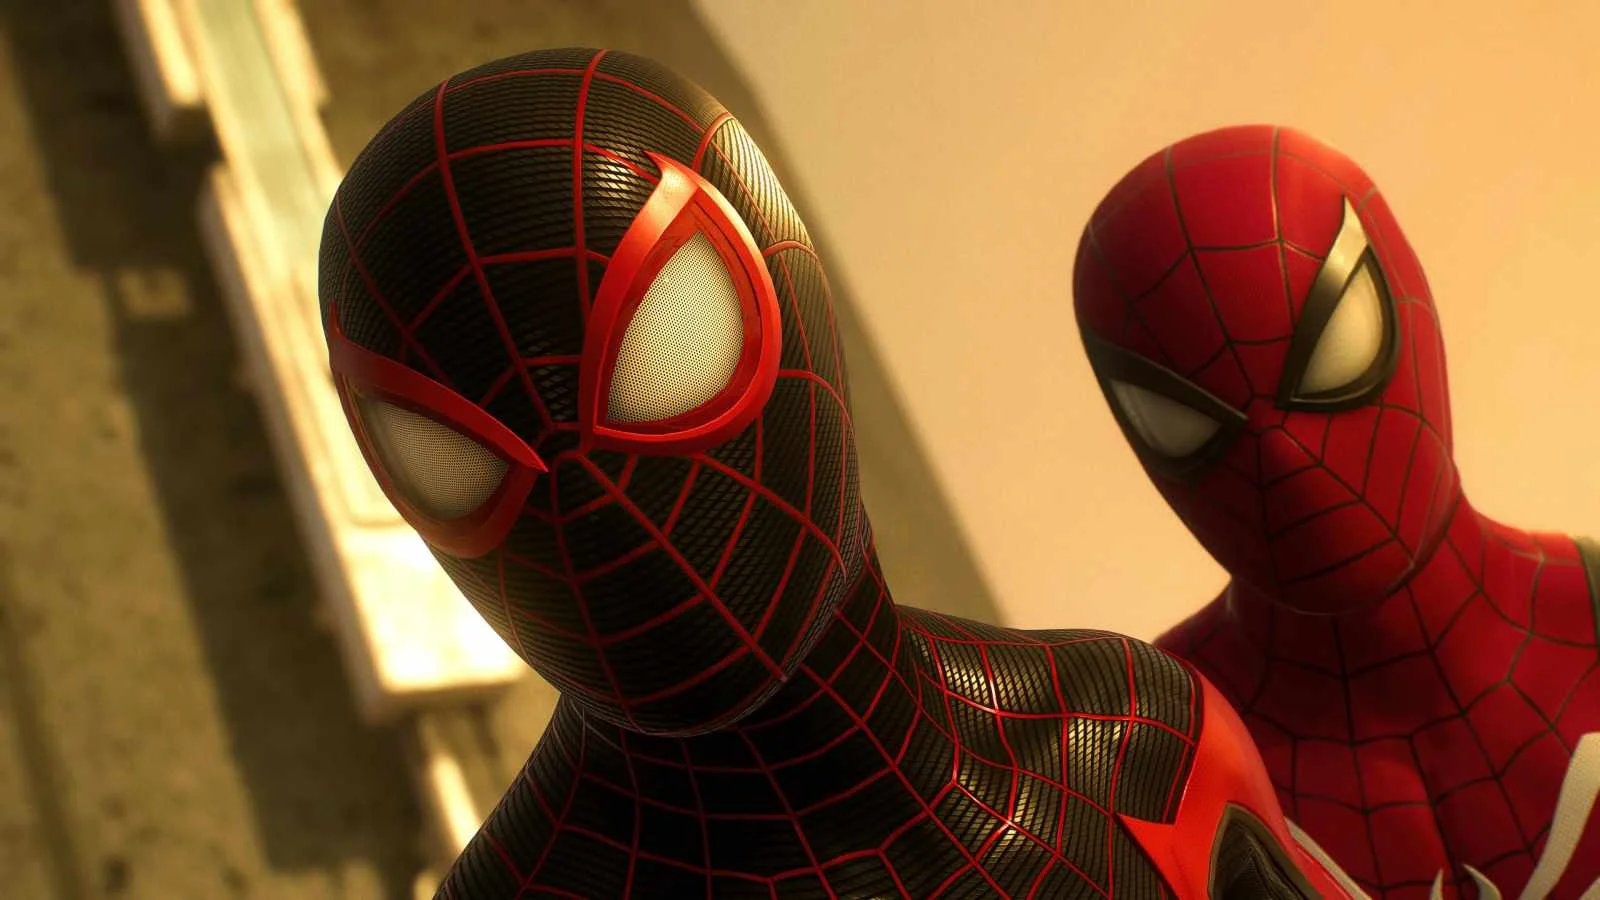 Marvel's Spider-Man 2 PC gameplay leaked online